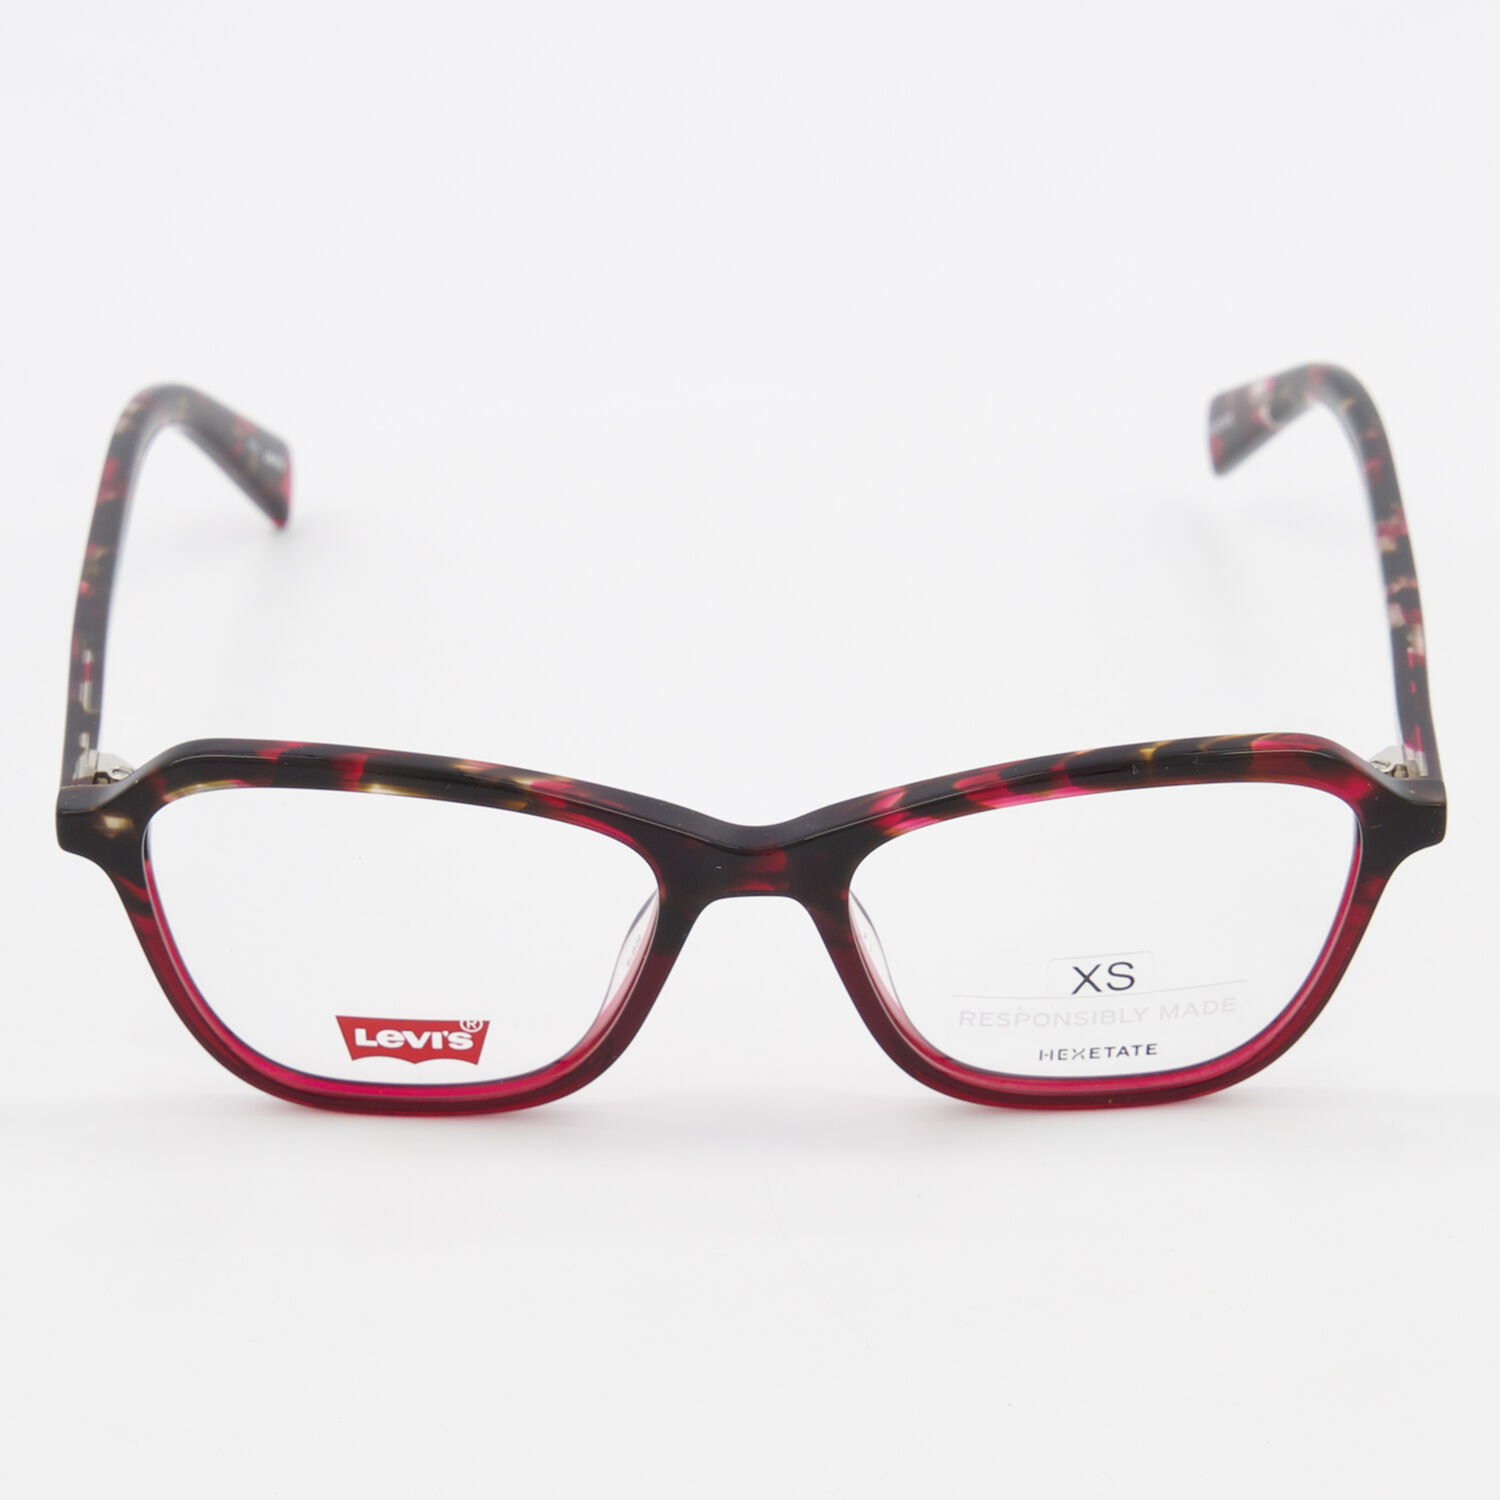 Red Havana LV1033 Cat Eye Glasses Frames - TK Maxx UK